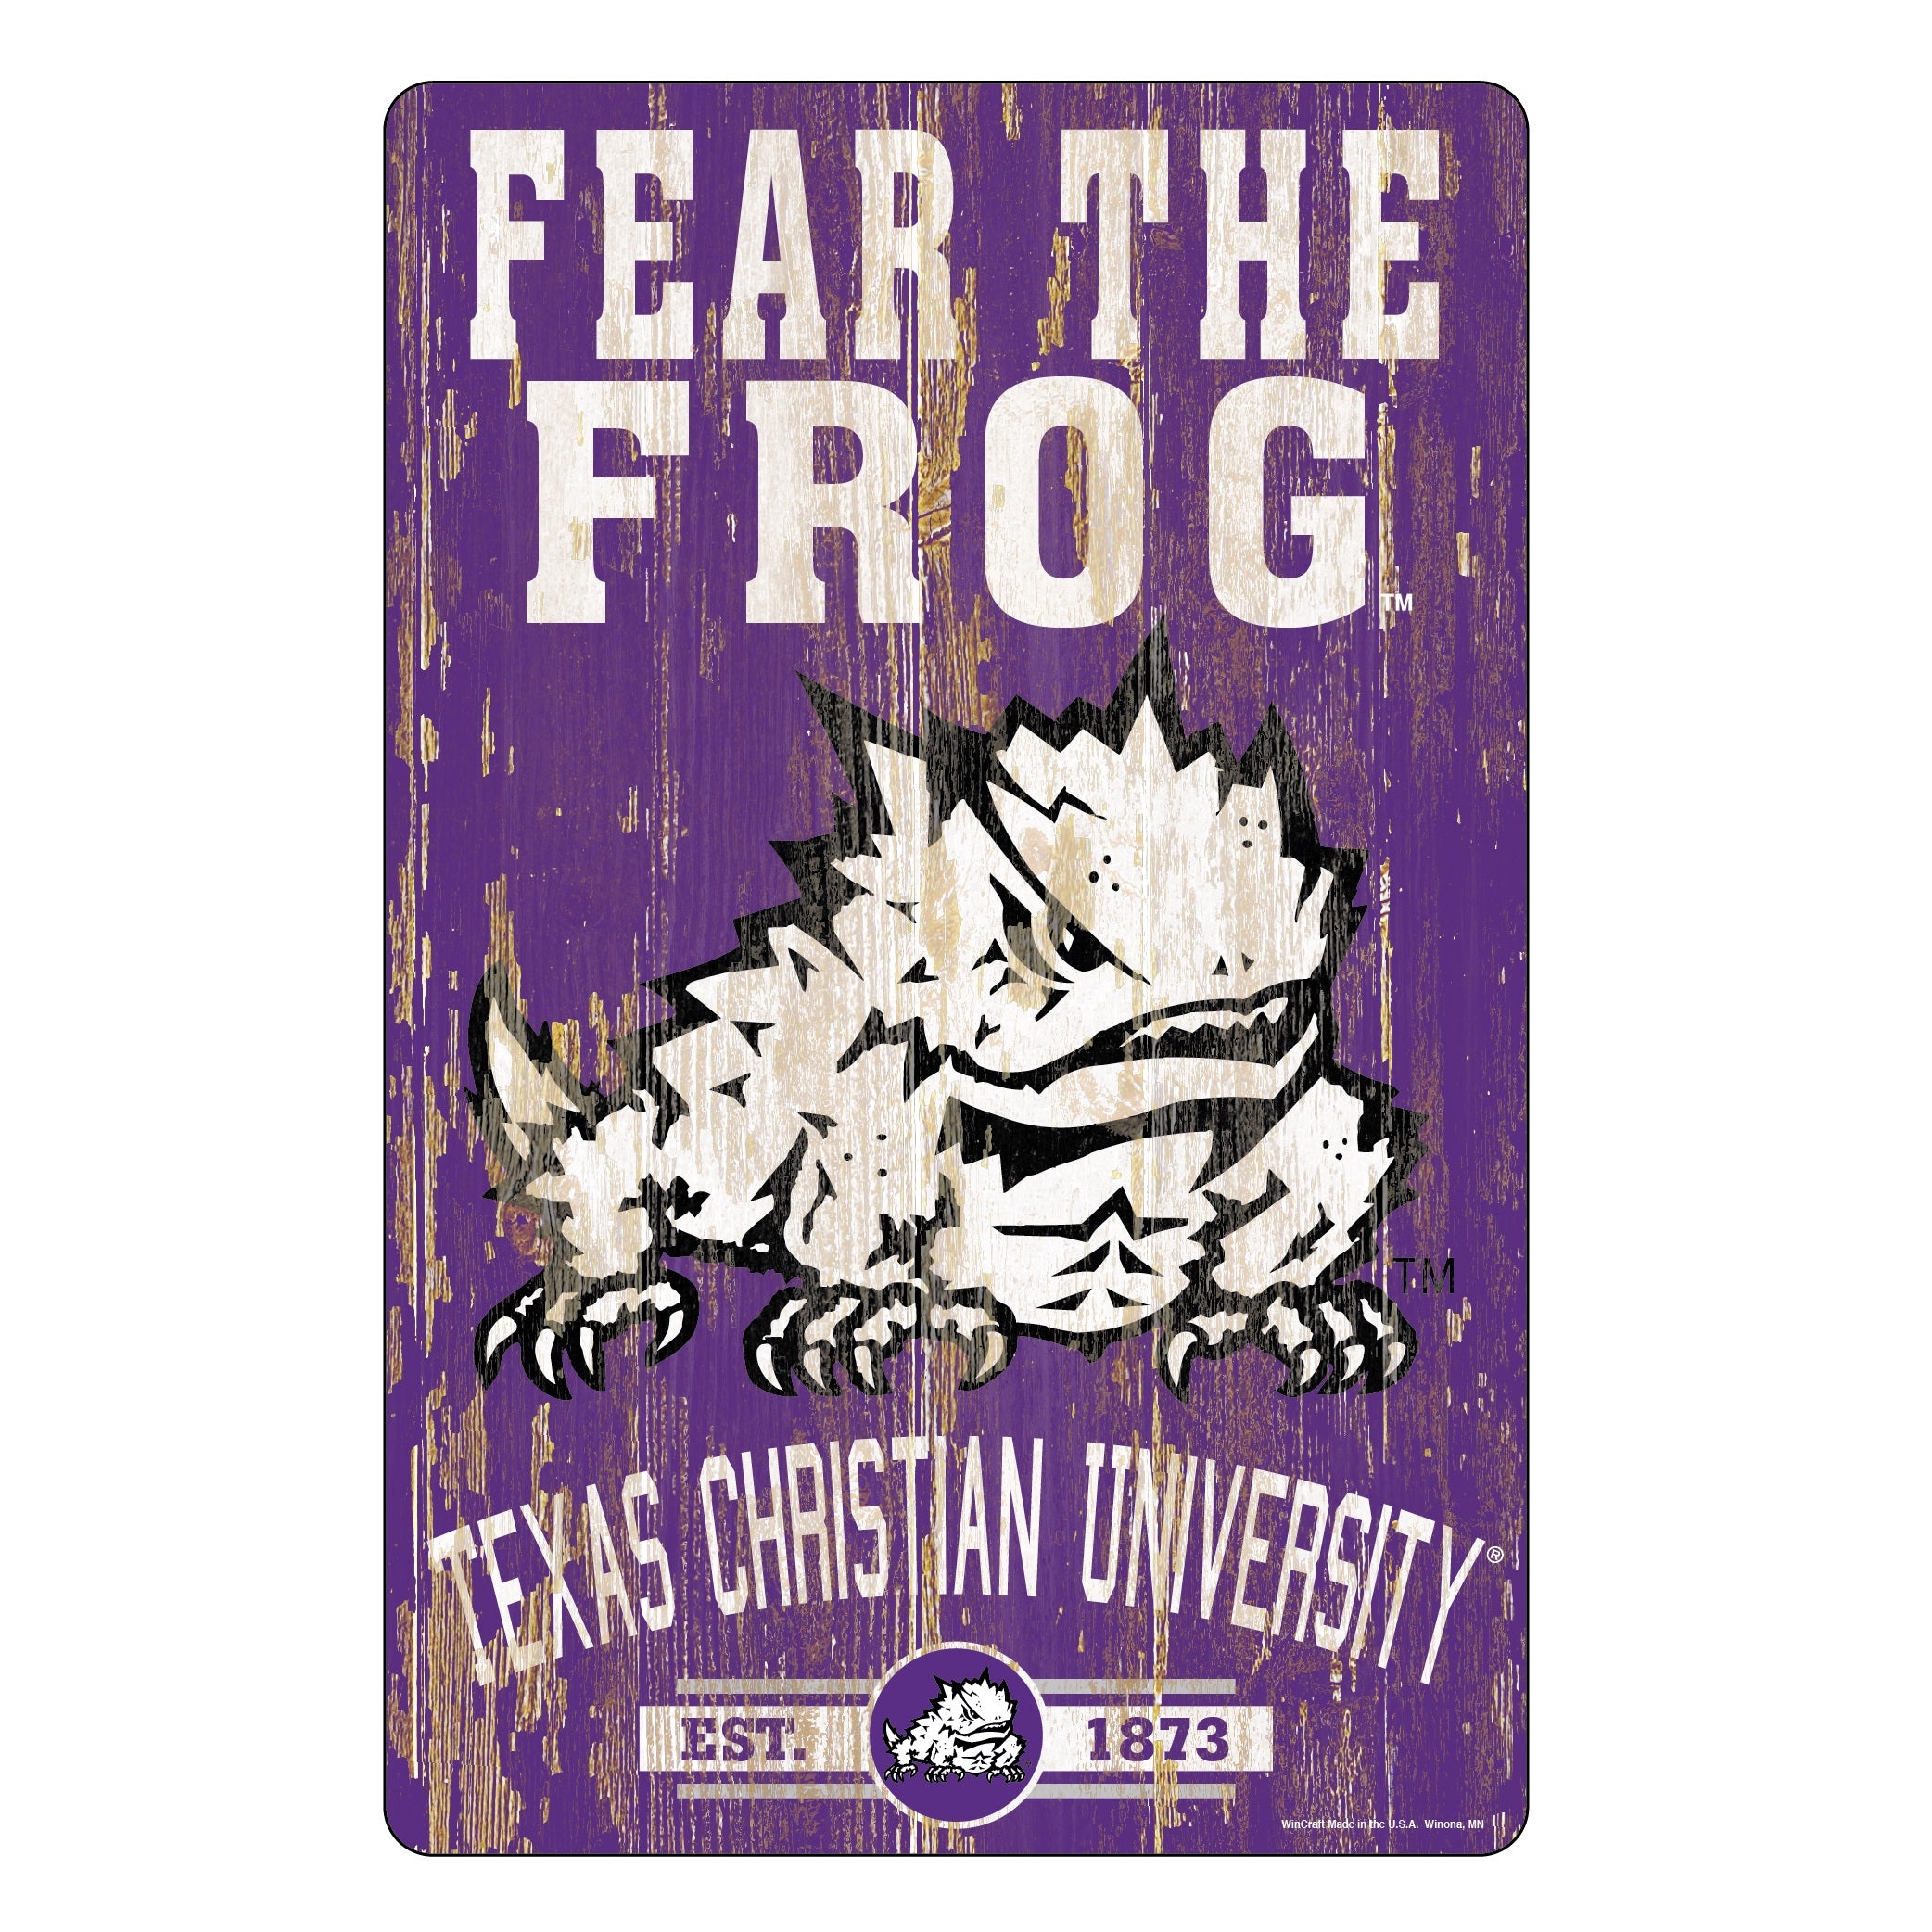 TCU Horned Frogs Sign 11x17 Wood Slogan Design